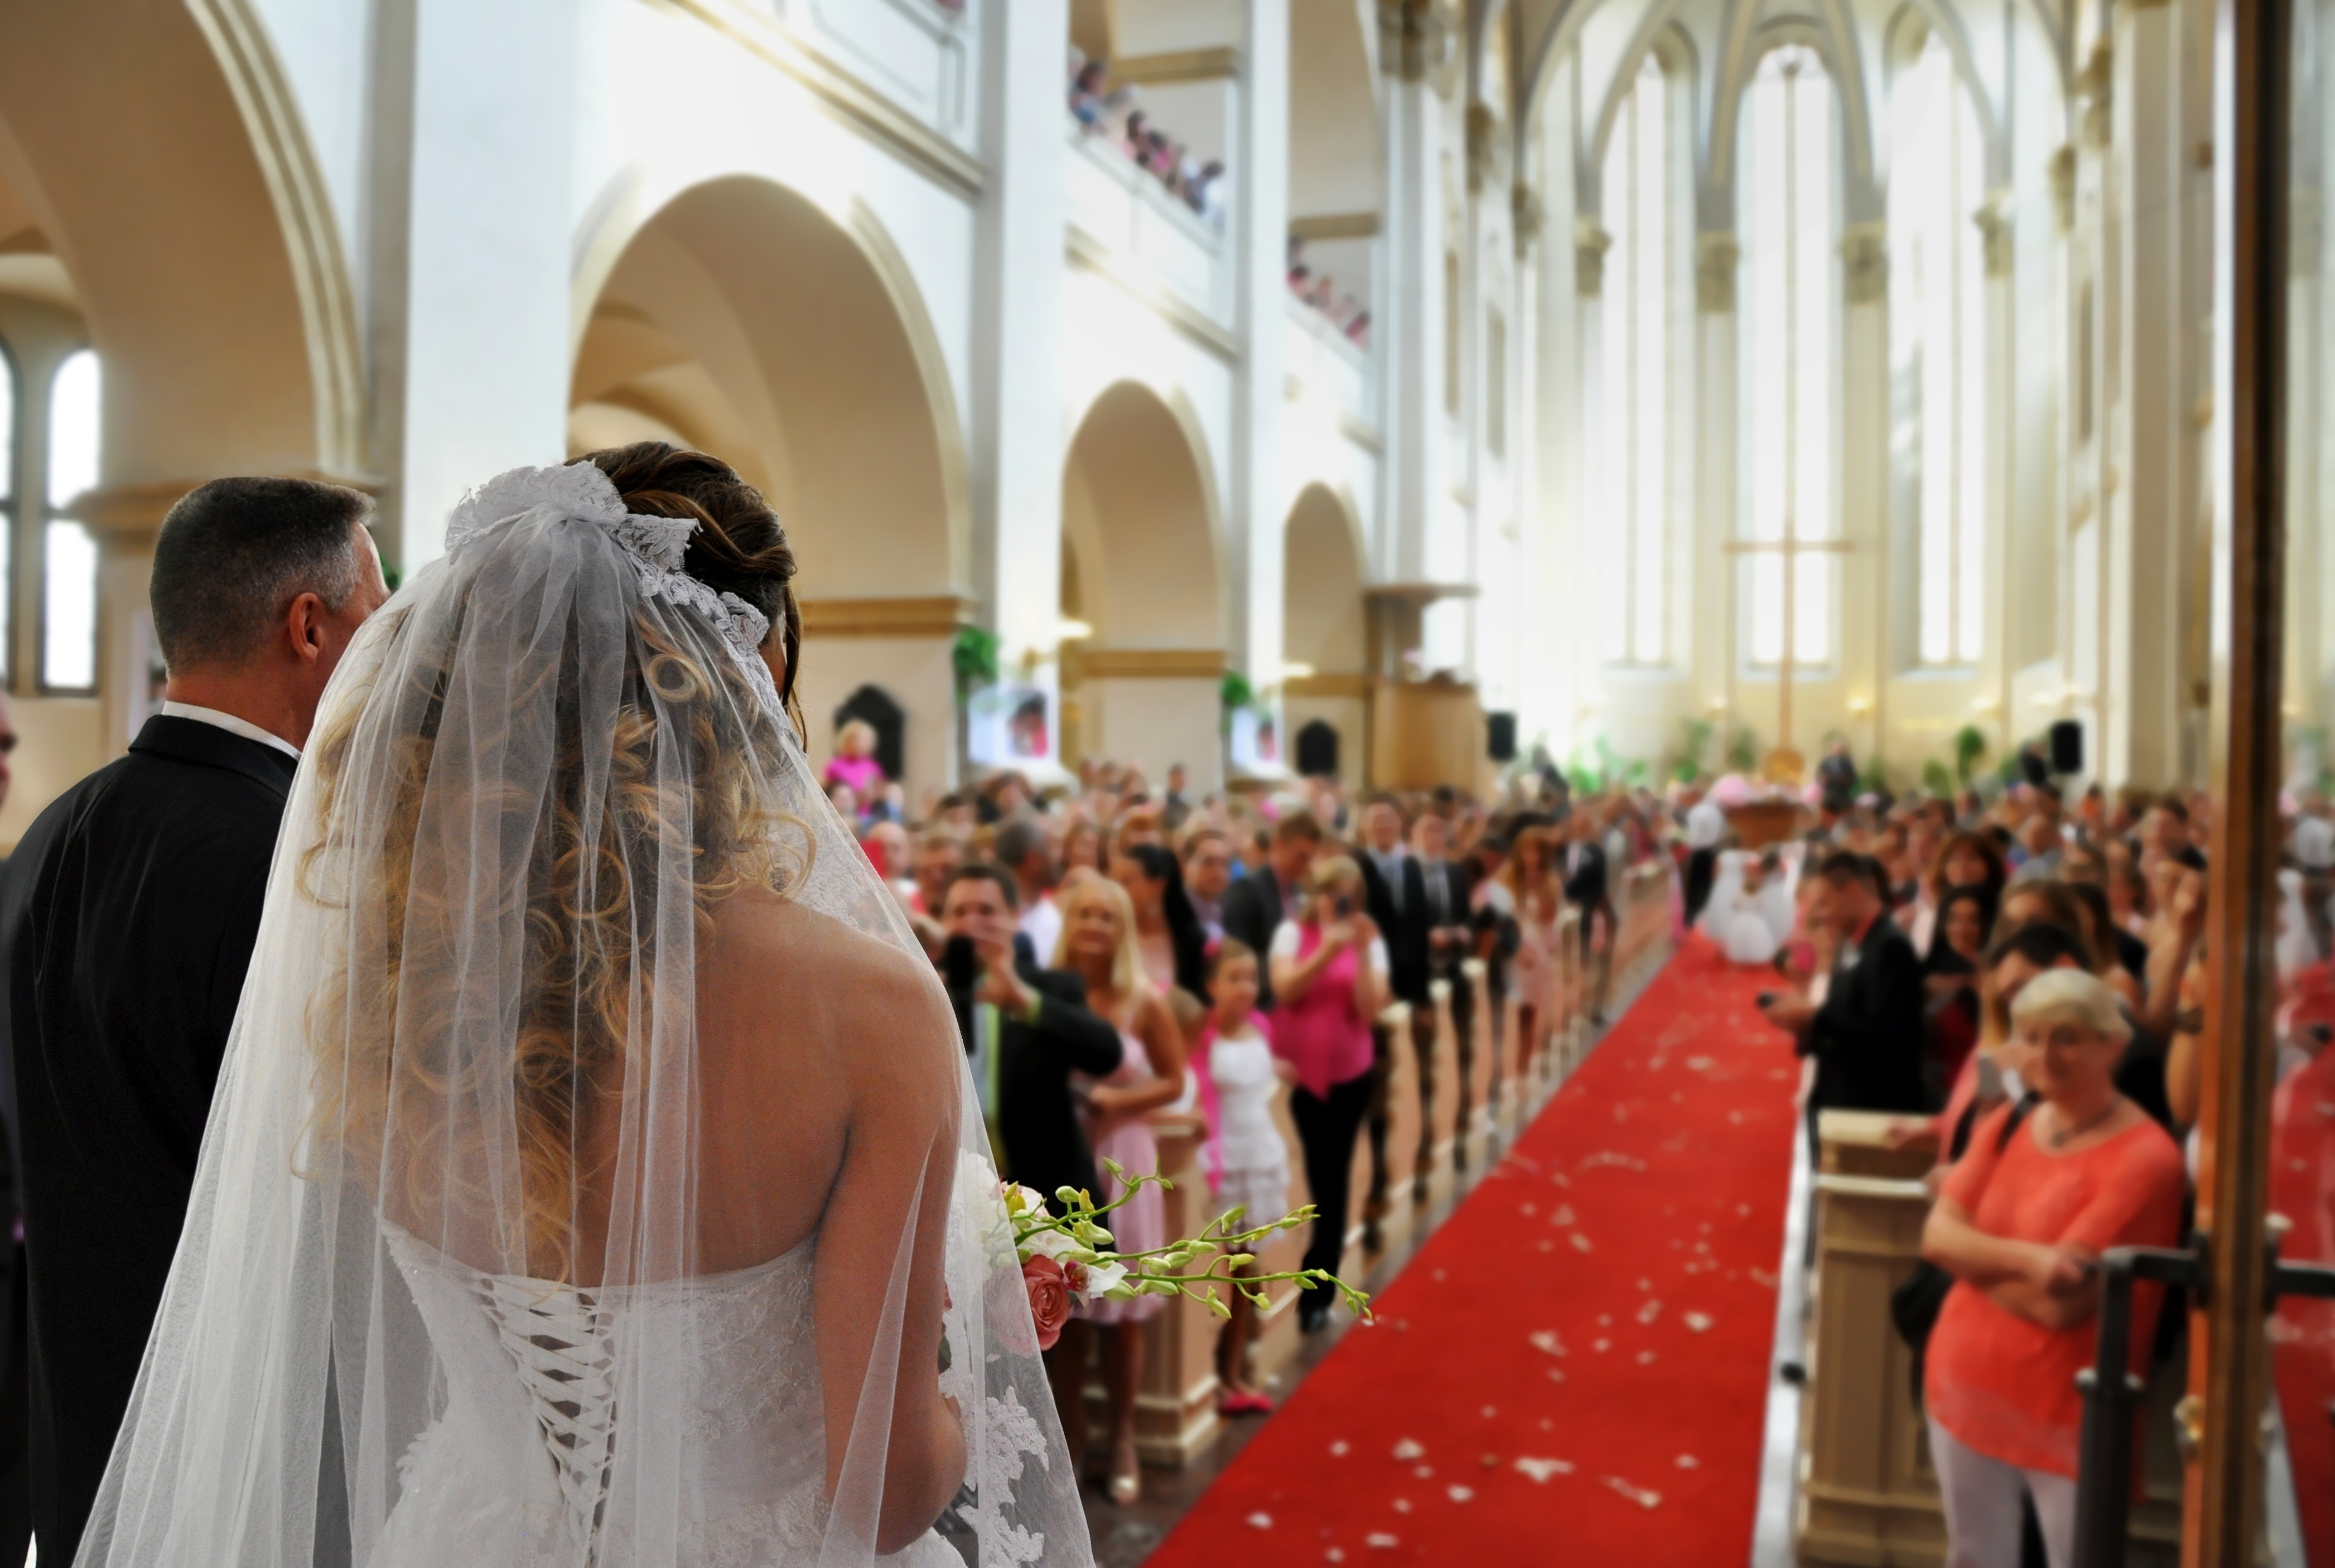 Bonita boda en una gran iglesia | Fuente: Shutterstock